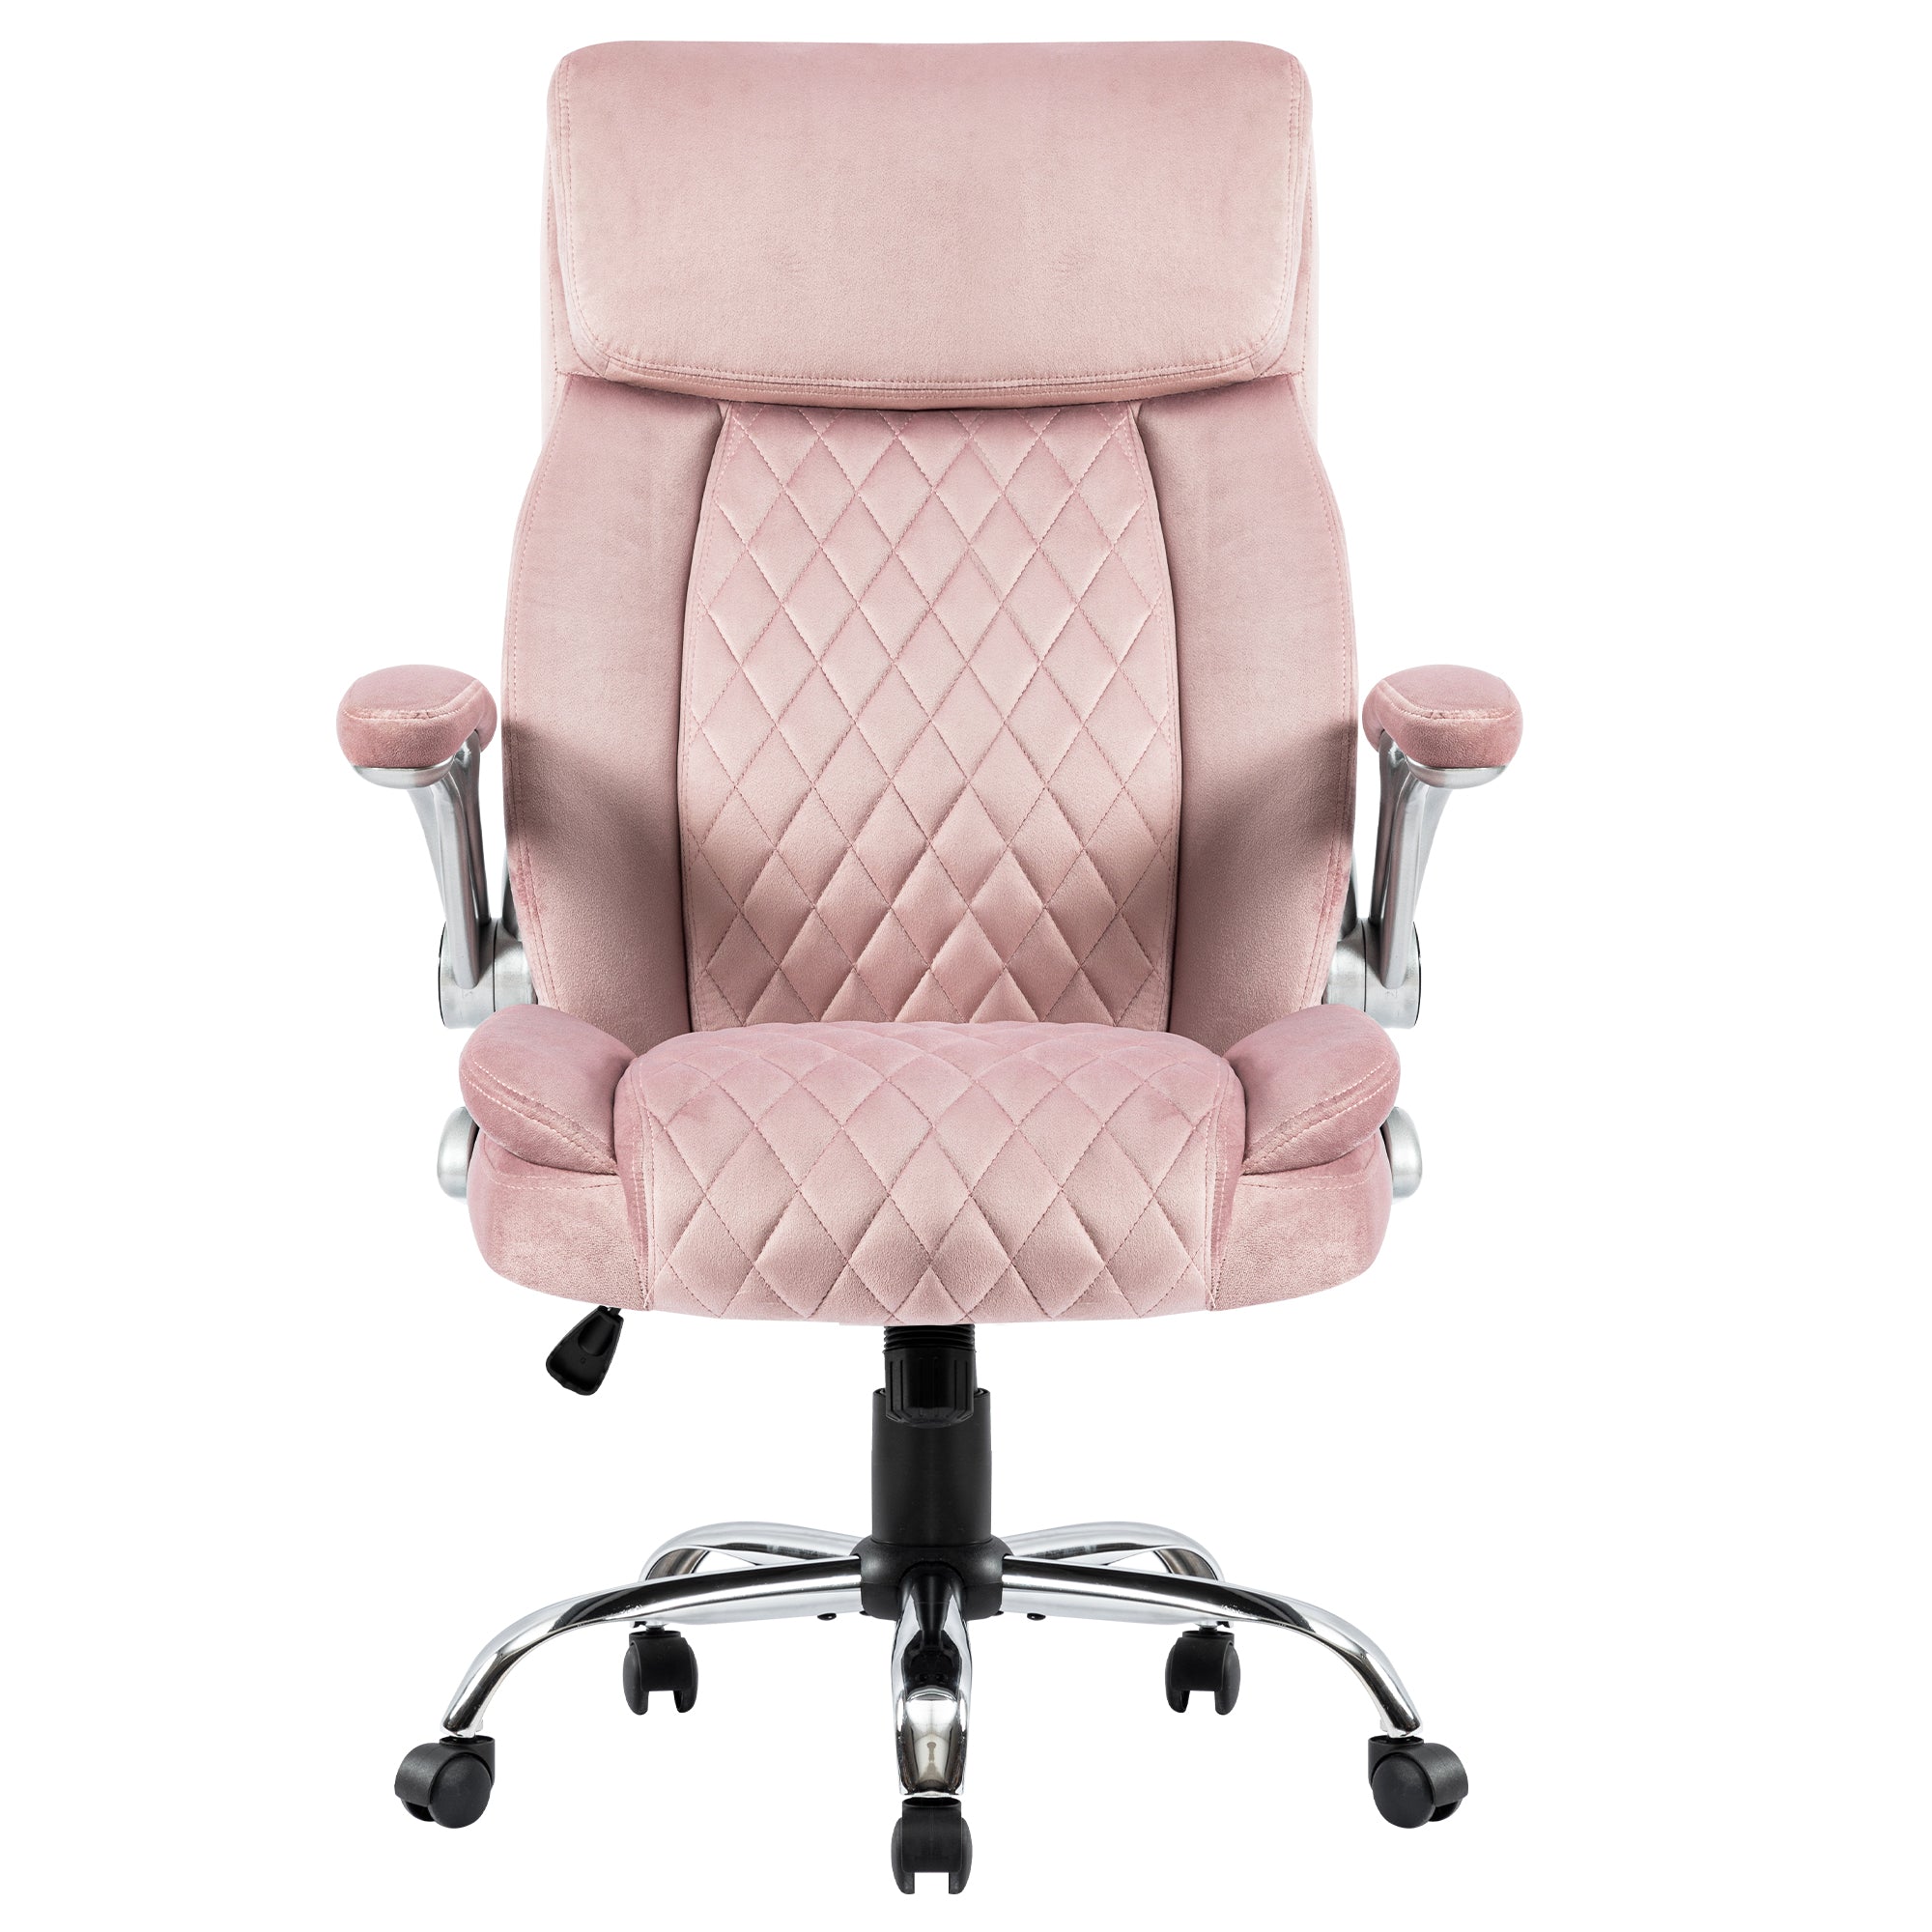 Bellemave® Velvet Swivel Office Room Chair Executive Desk Chair Bellemave®